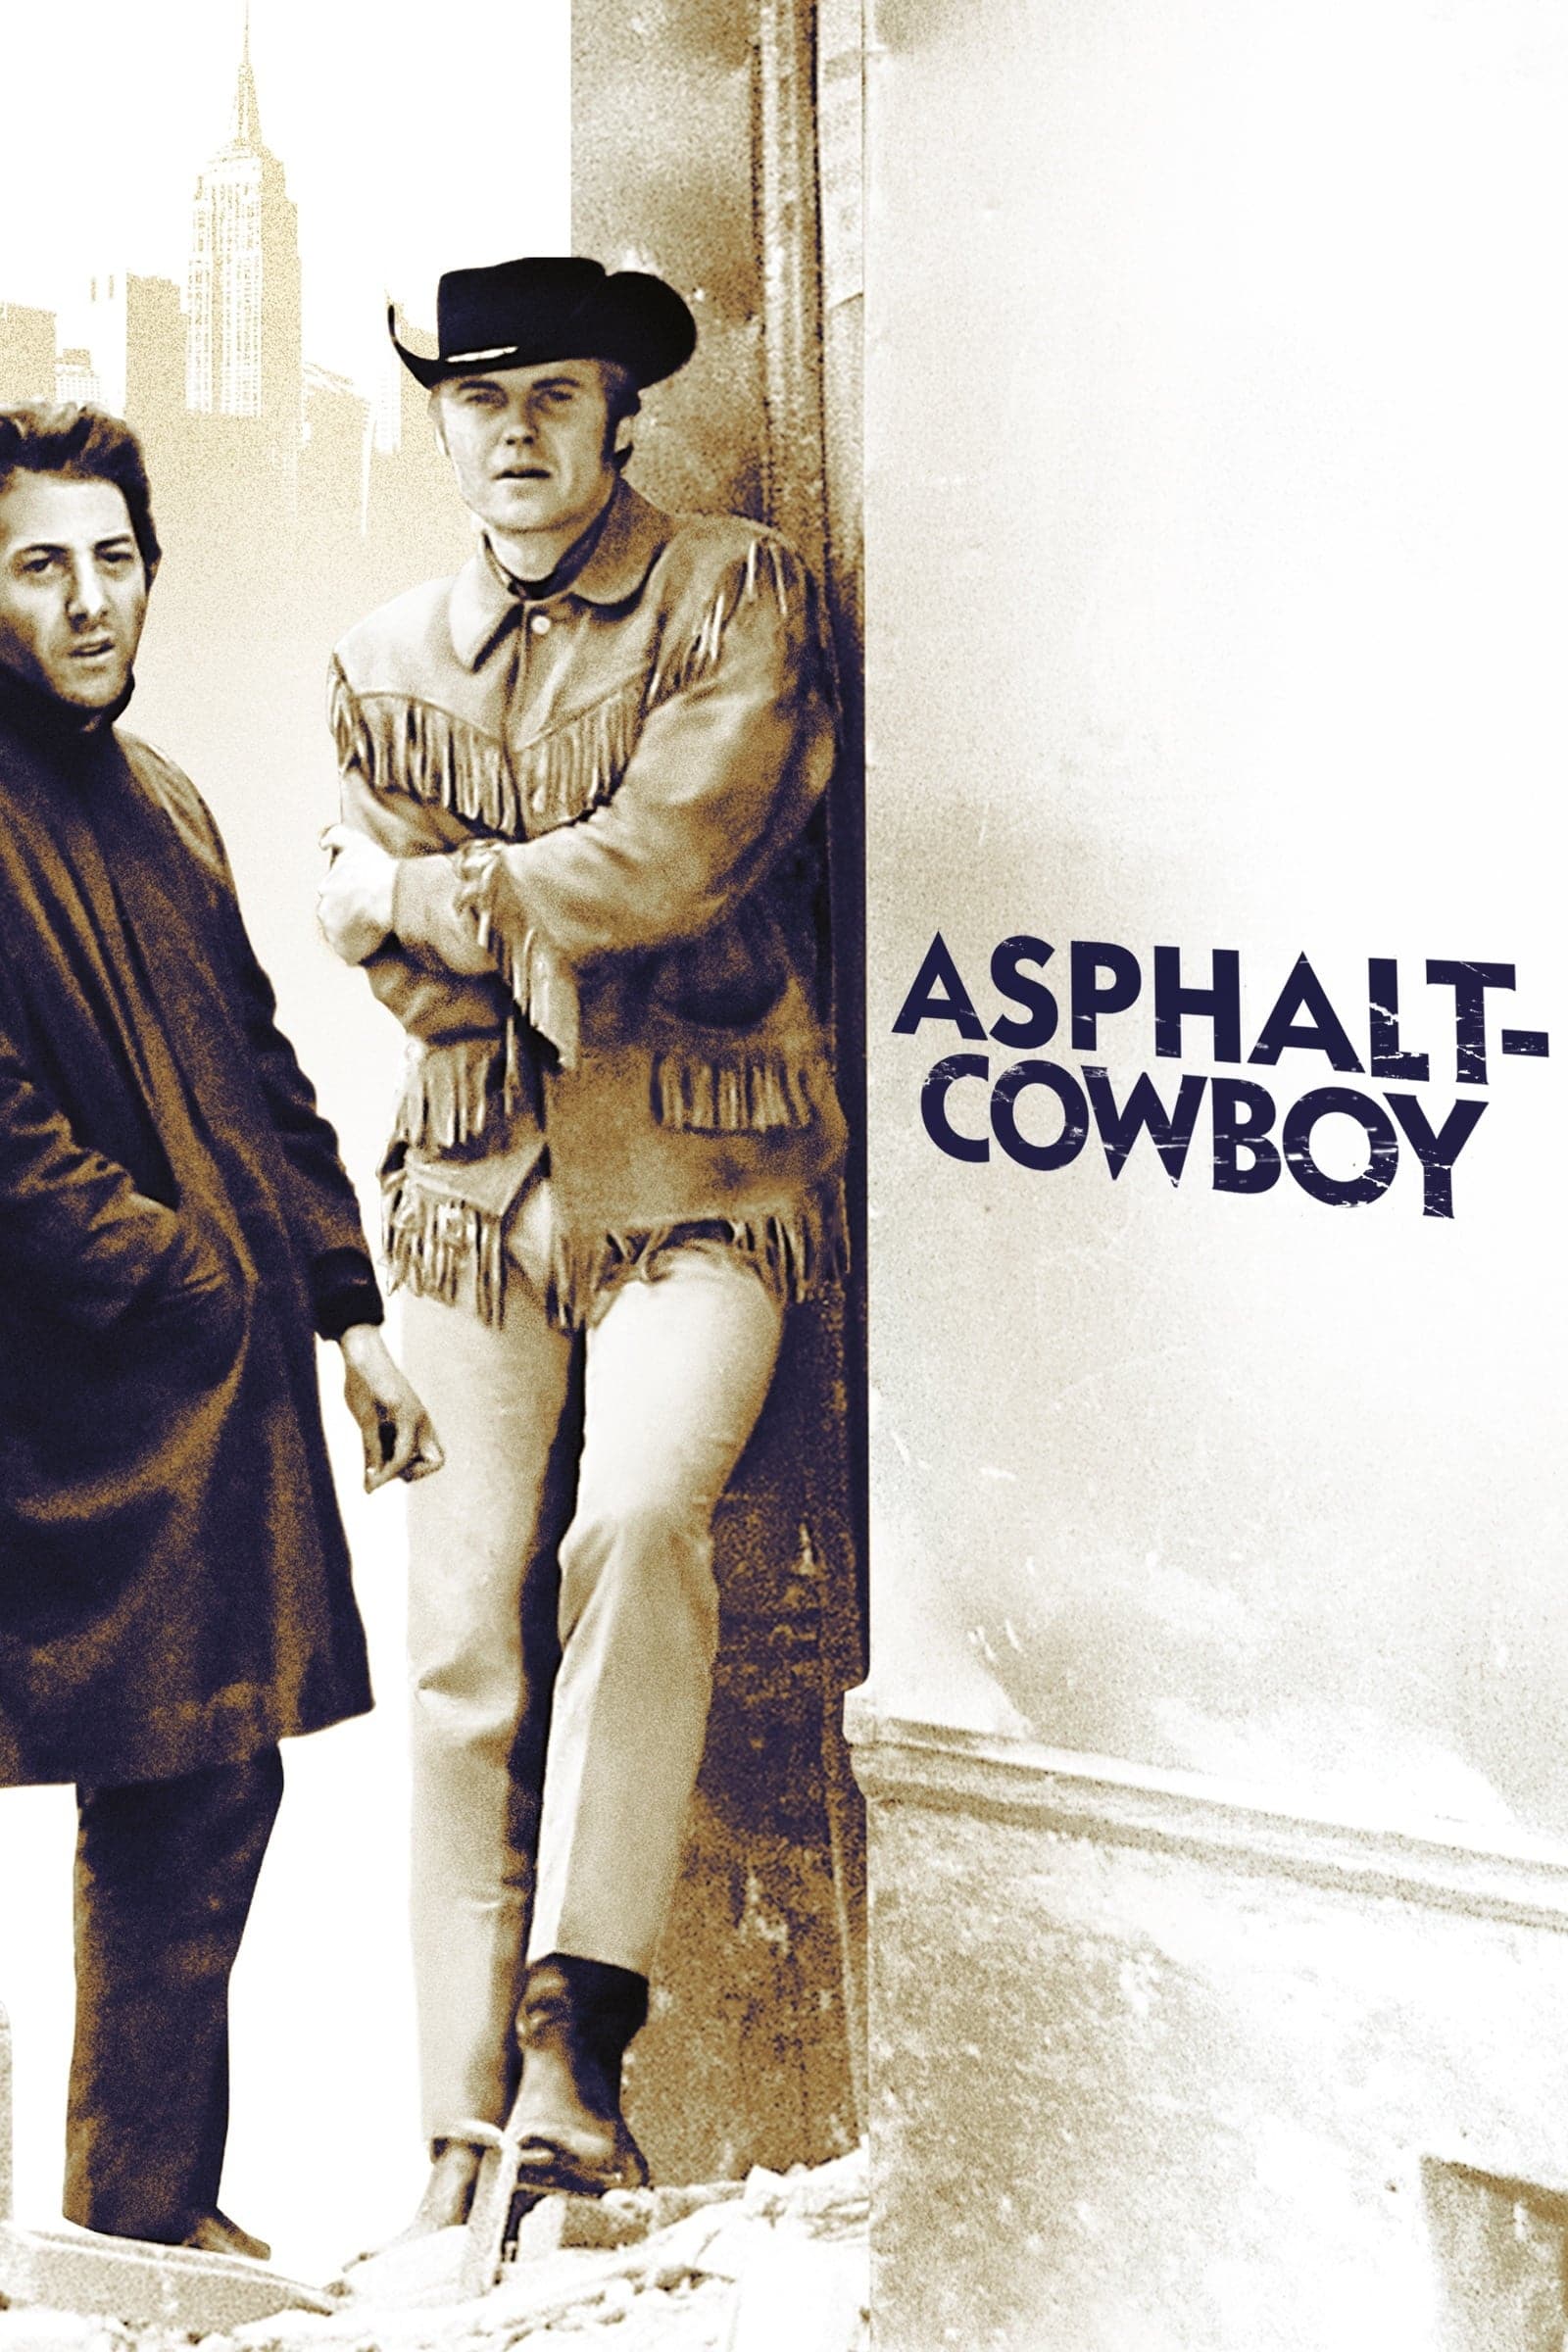 Plakat von "Asphalt-Cowboy"